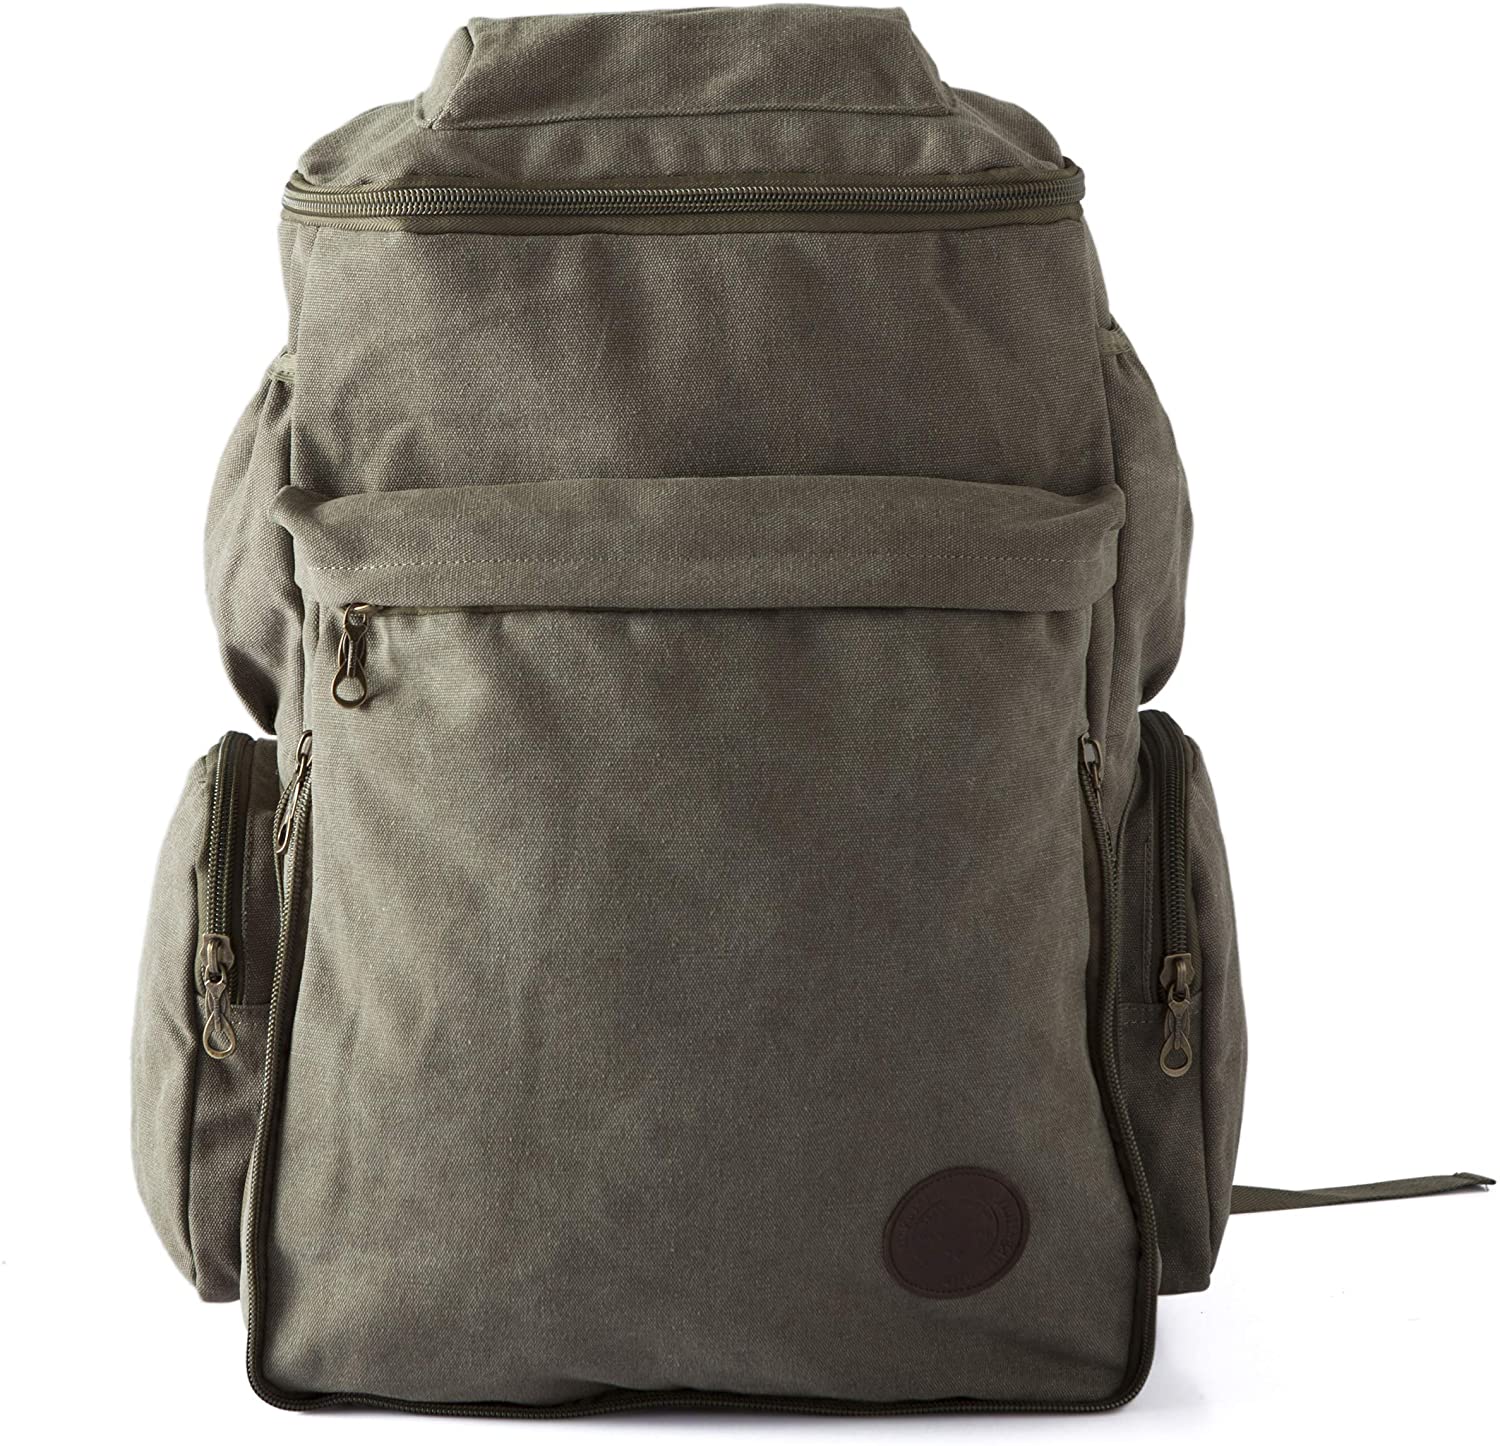 SLHFPX Laptop Backpack Falling Snowflakes Gym Backpack for Men Large Rucksack Bookbag